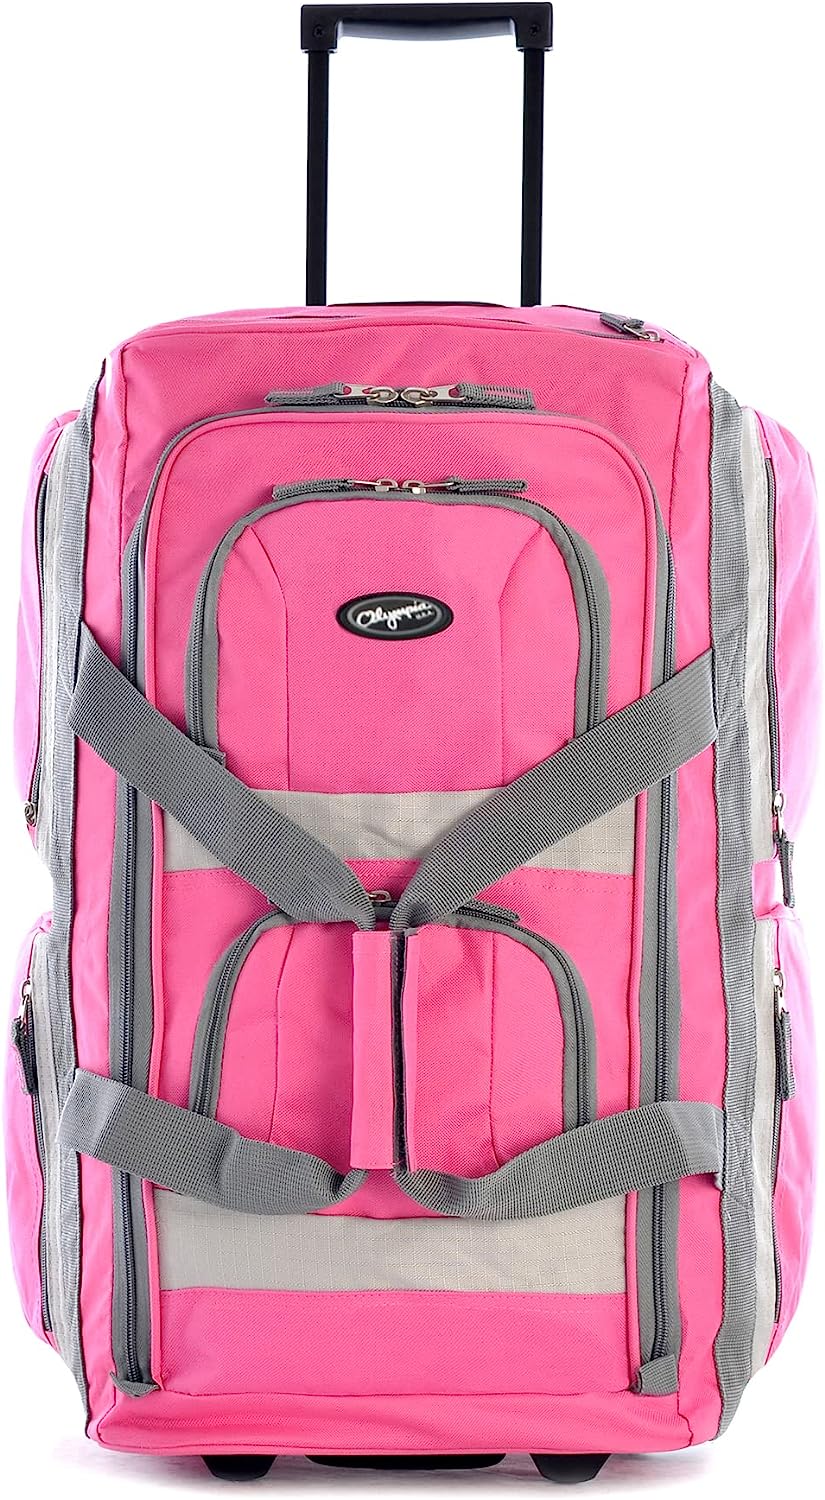 8 Pocket Rolling Duffel Bag, Hot Pink, 22 inch